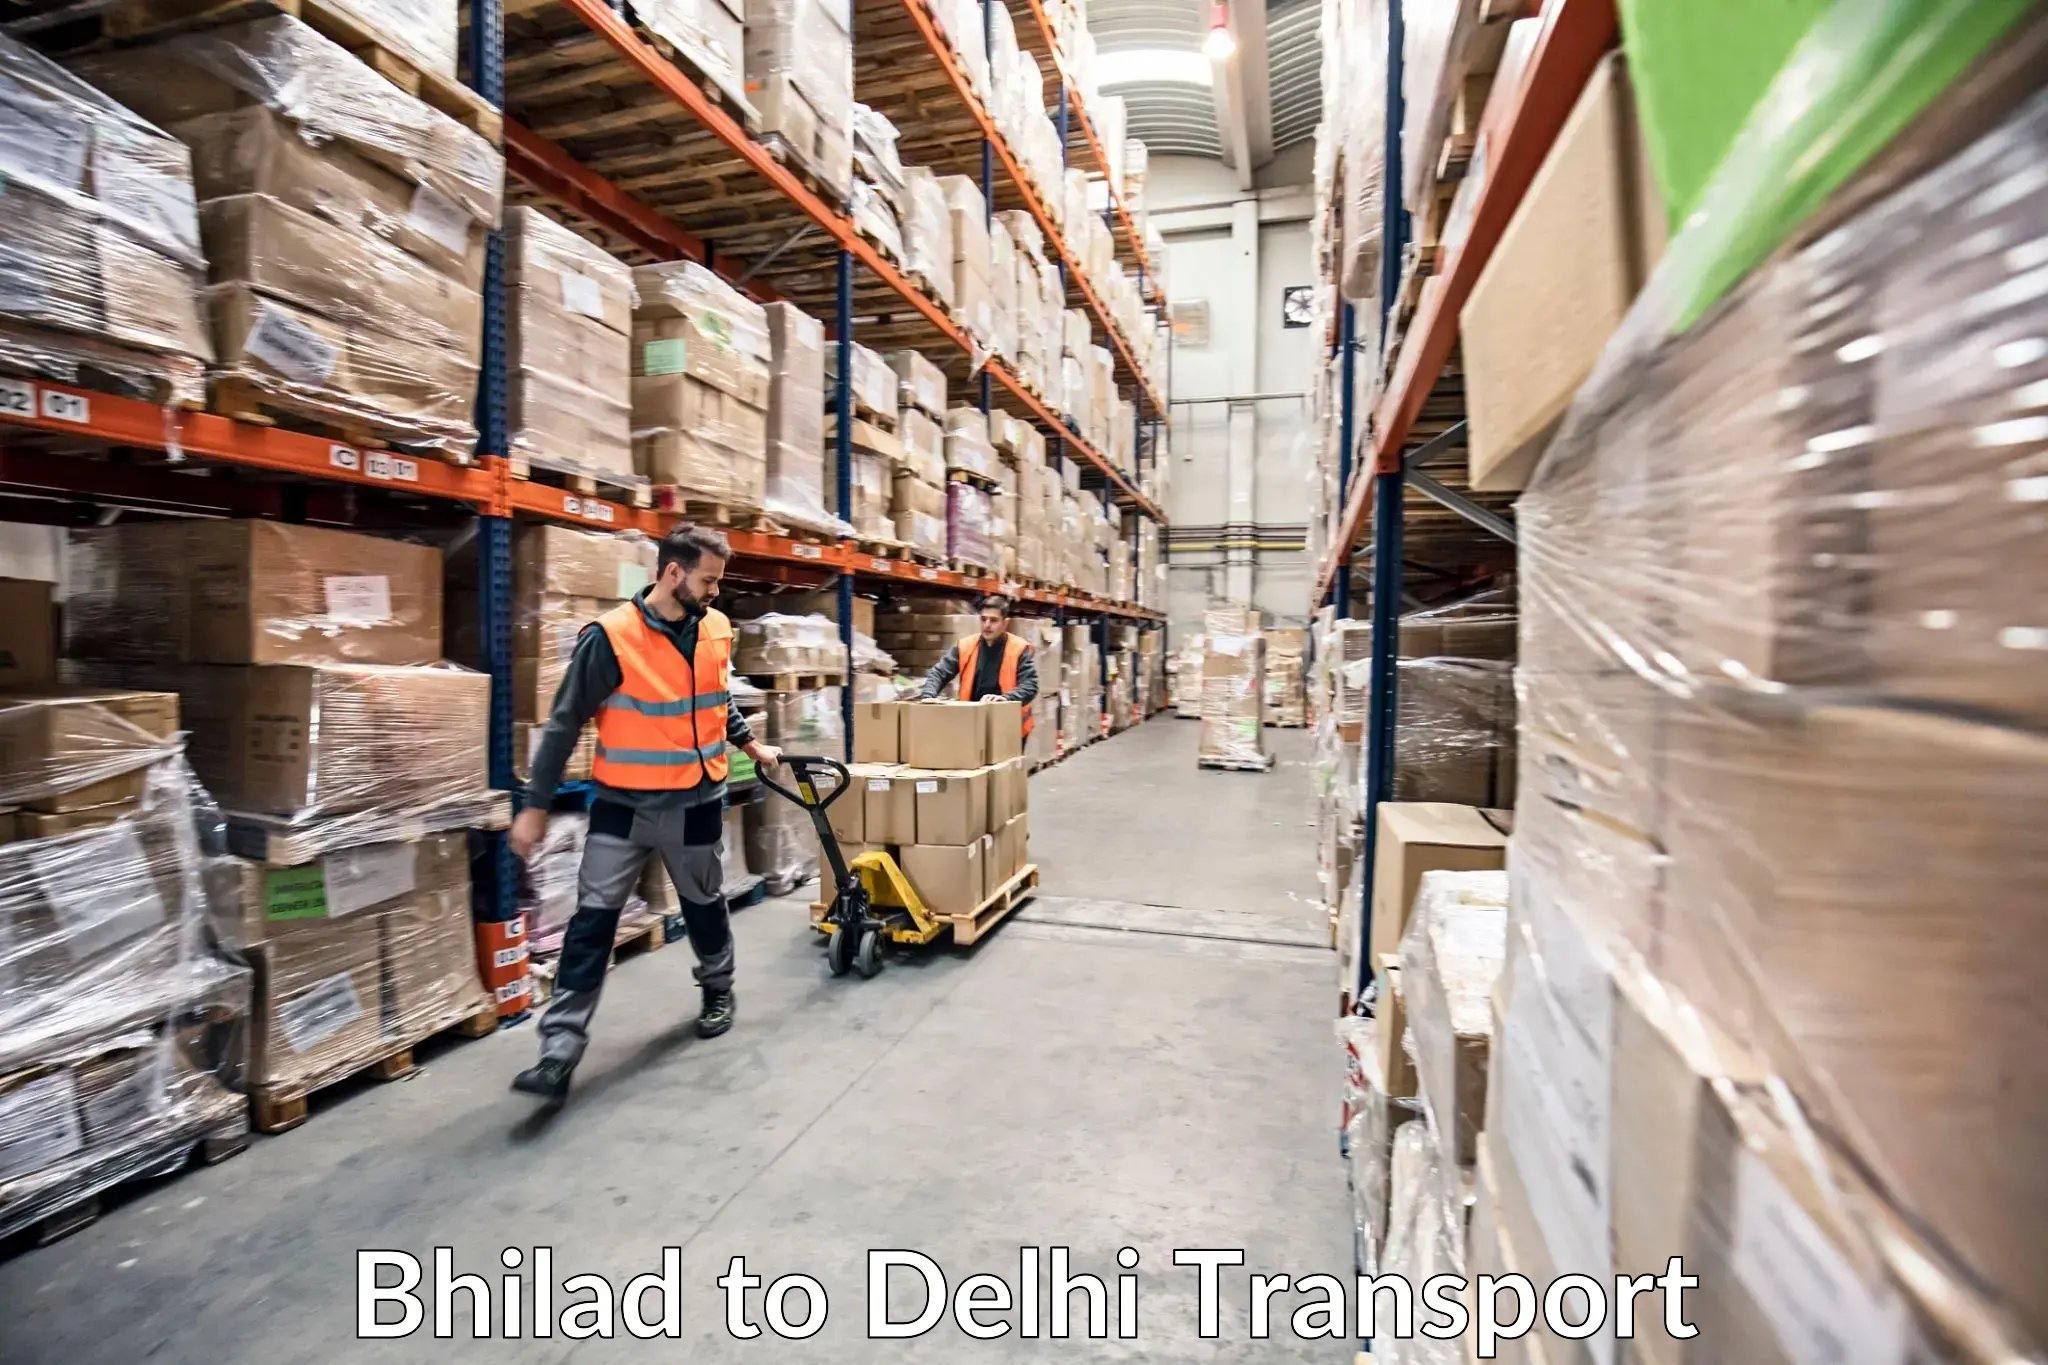 Delivery service Bhilad to Ashok Vihar